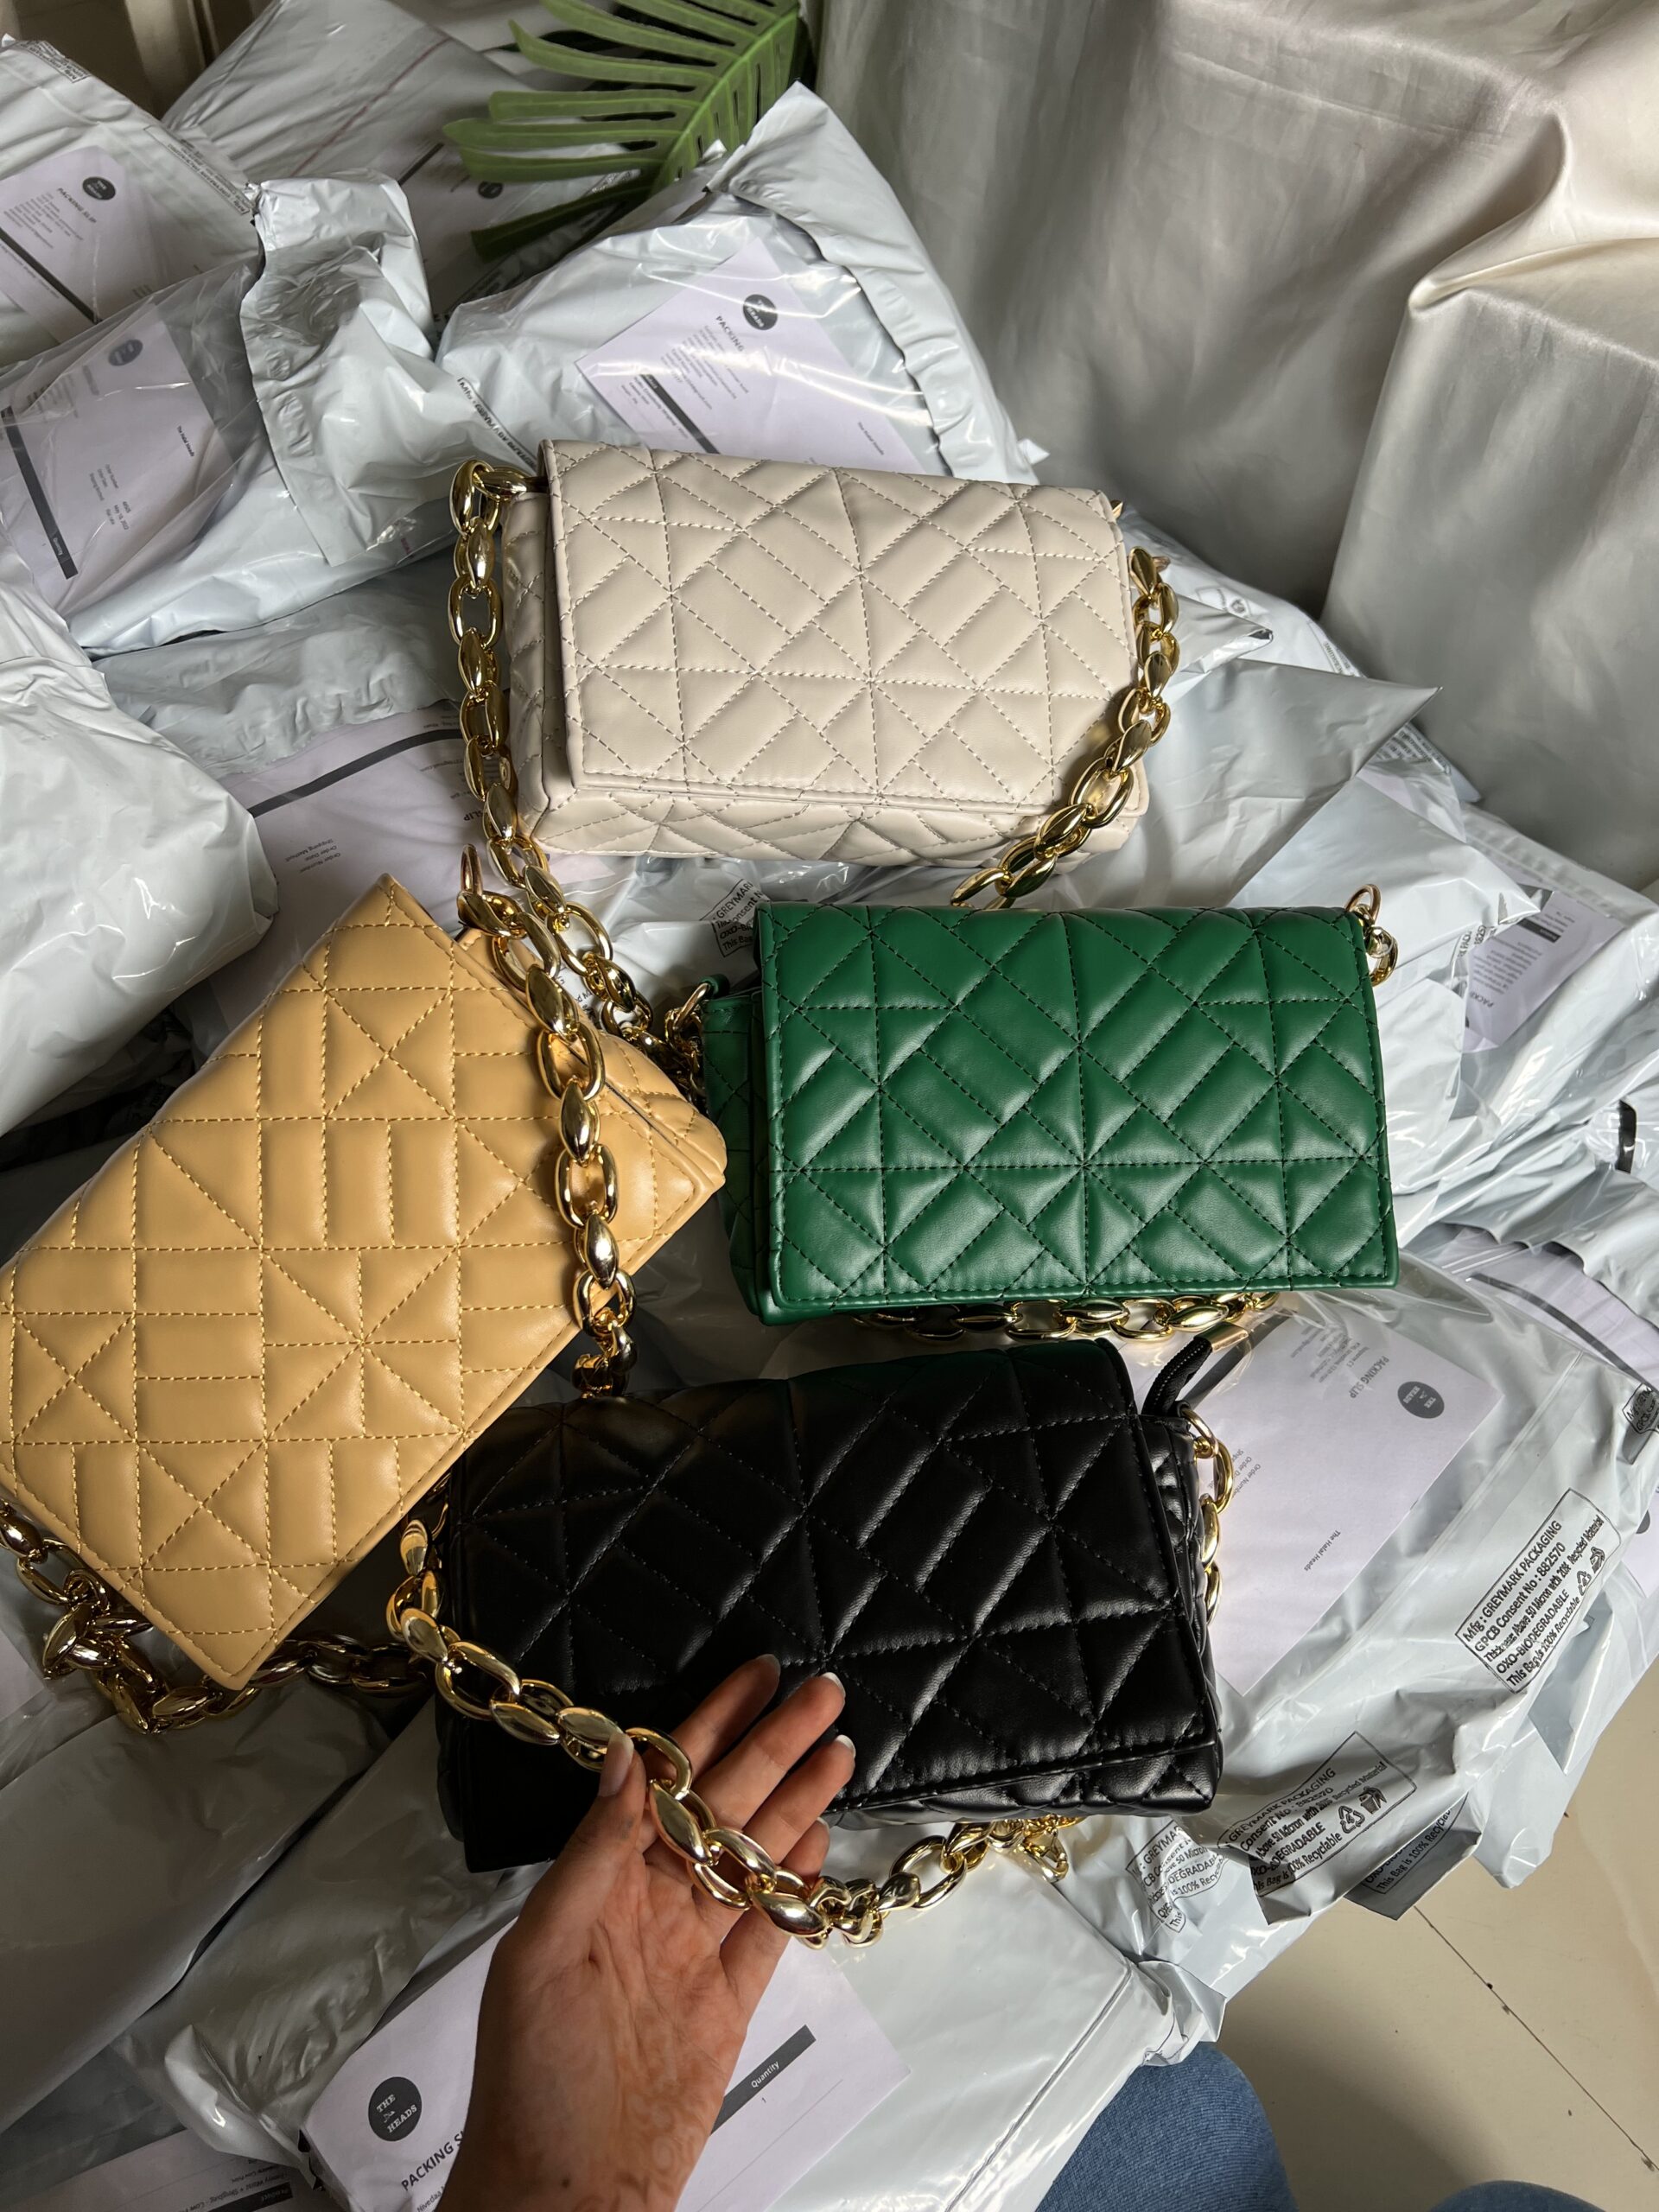 Microscopic Handbag' sells for over $63,000 despite online criticism